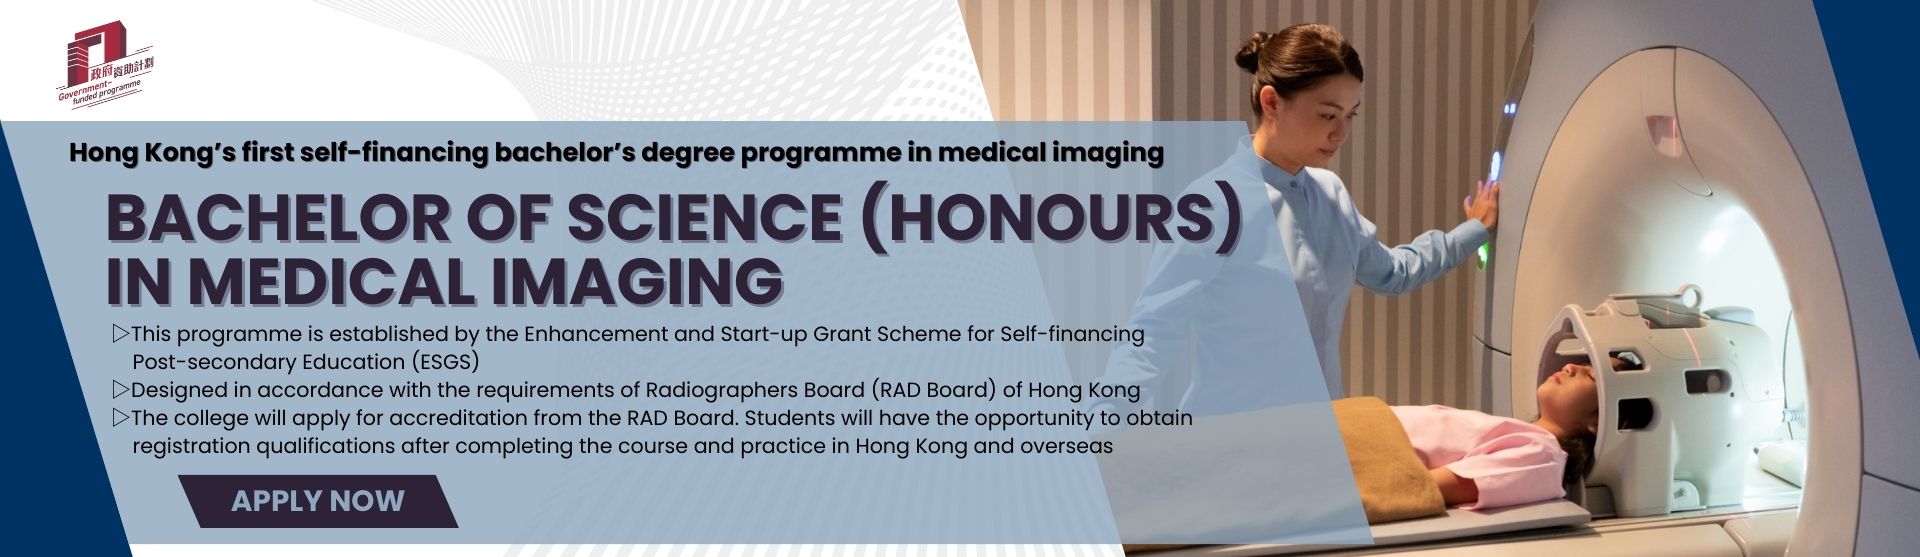 Bachelor of Science (Honours) in Medical Imaging